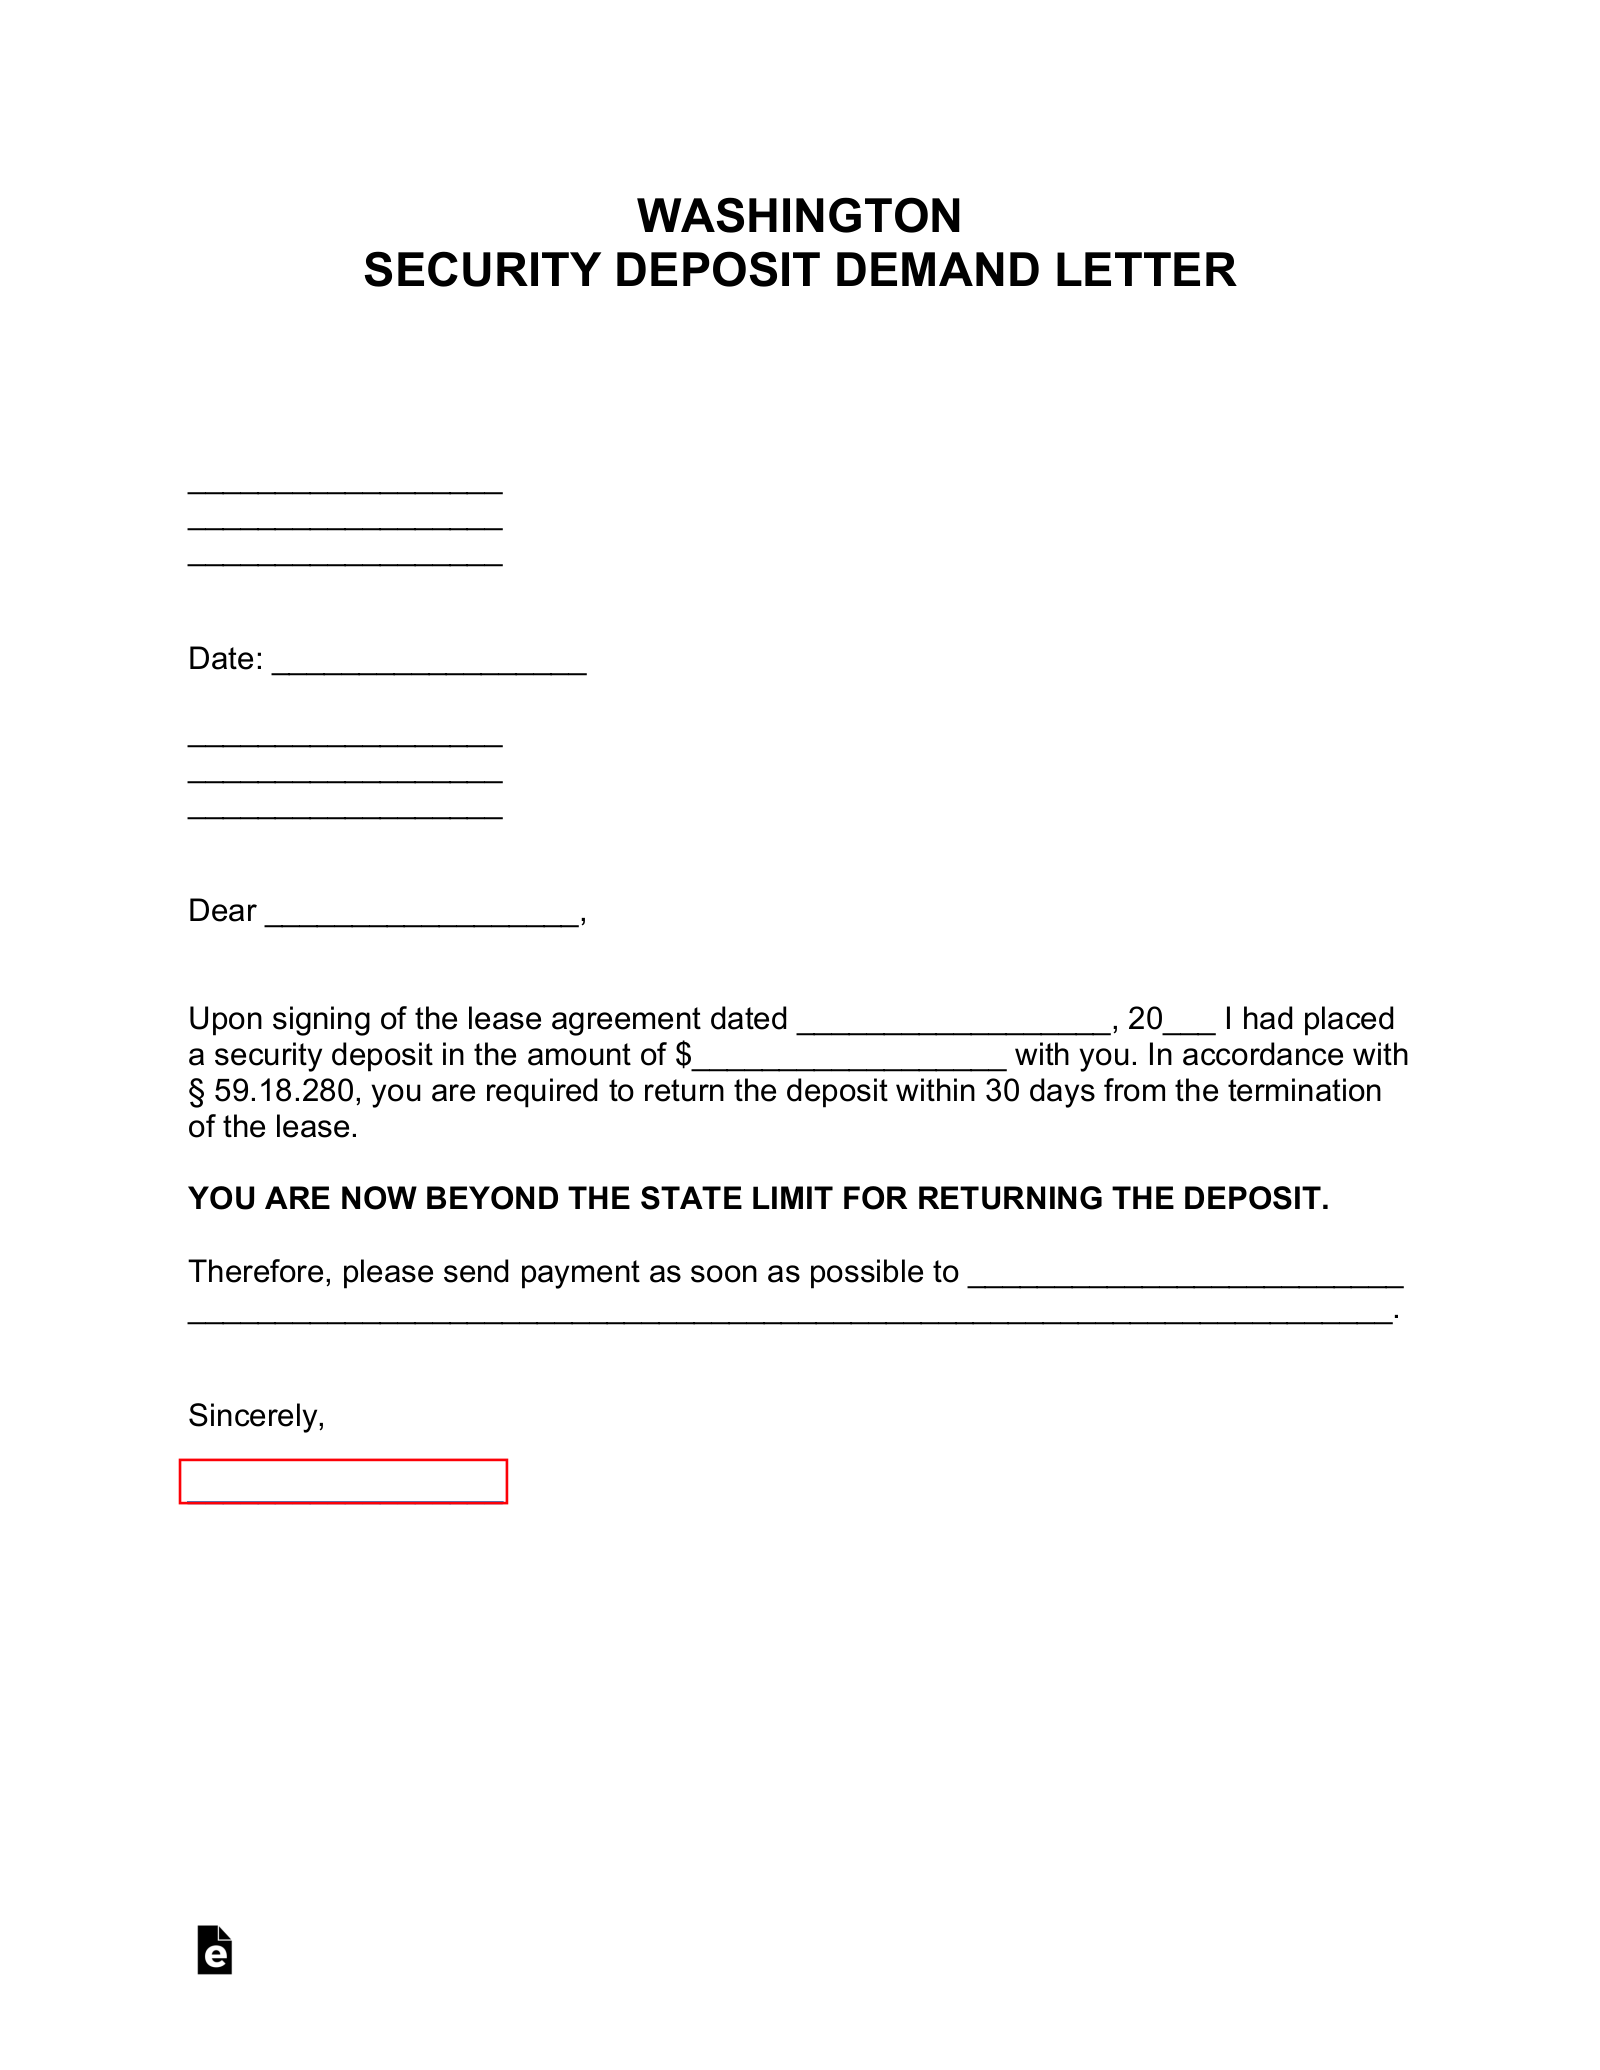 Washington Security Deposit Demand Letter